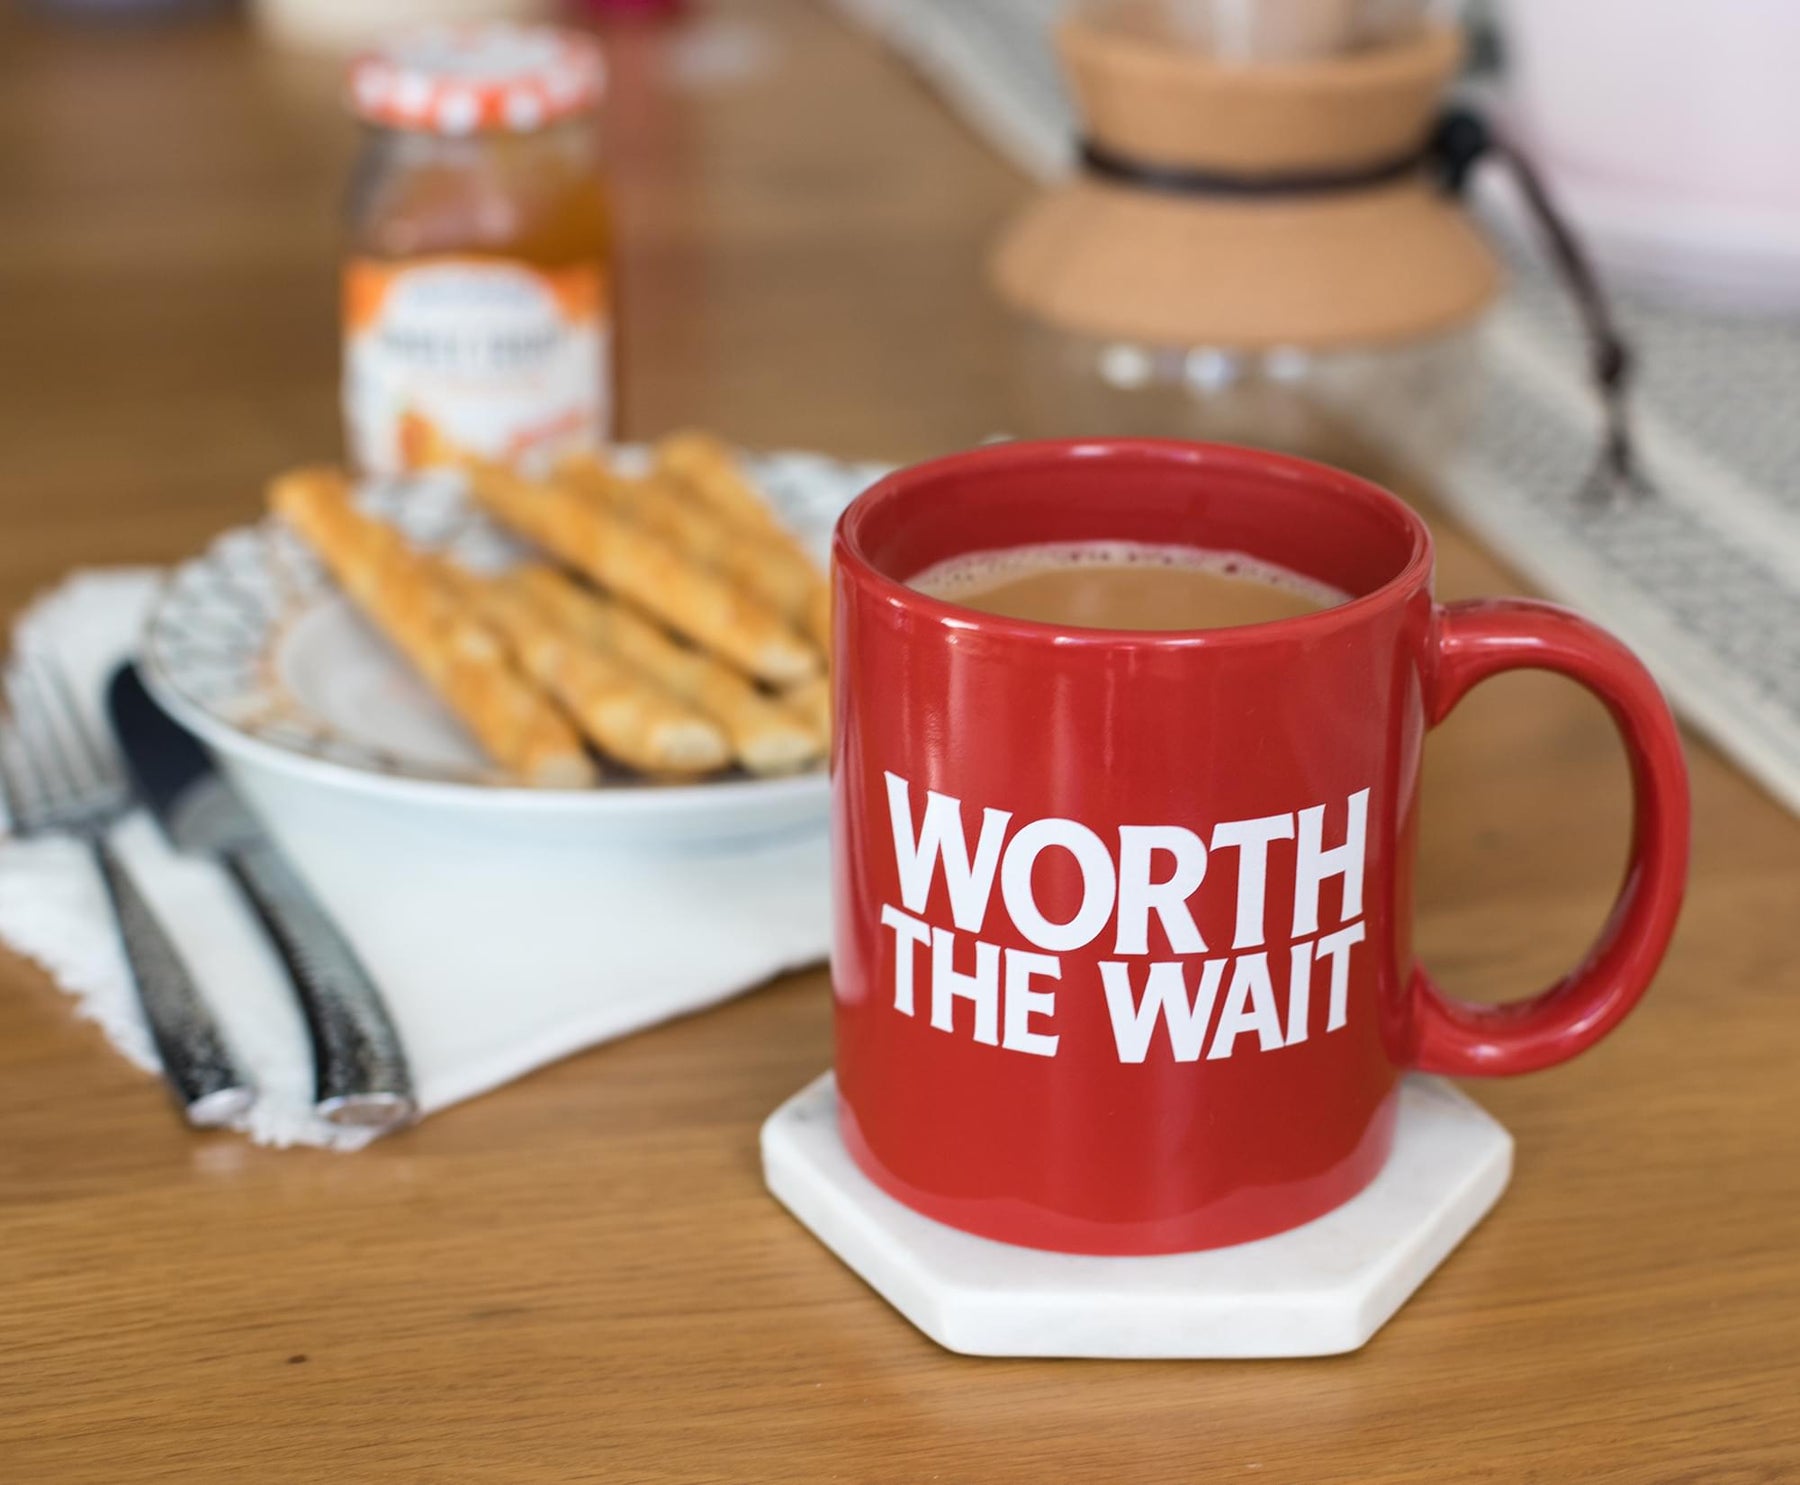 Heinz Ketchup Logo "Worth The Wait" Ceramic Coffee Mug | Holds 16 Ounces